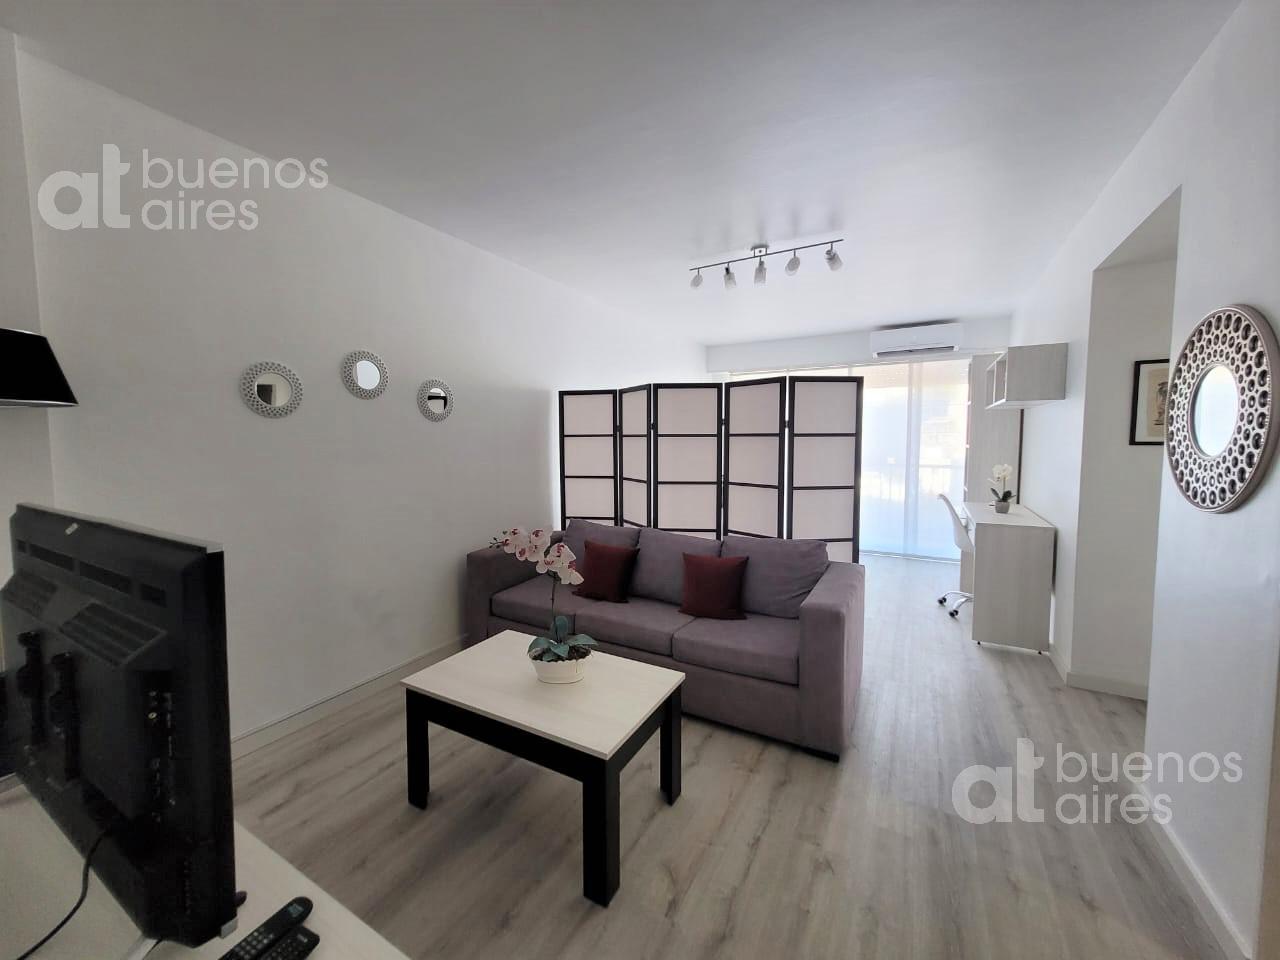 #5310087 | Temporary Rental | Apartment | Barracas (At Buenos Aires)